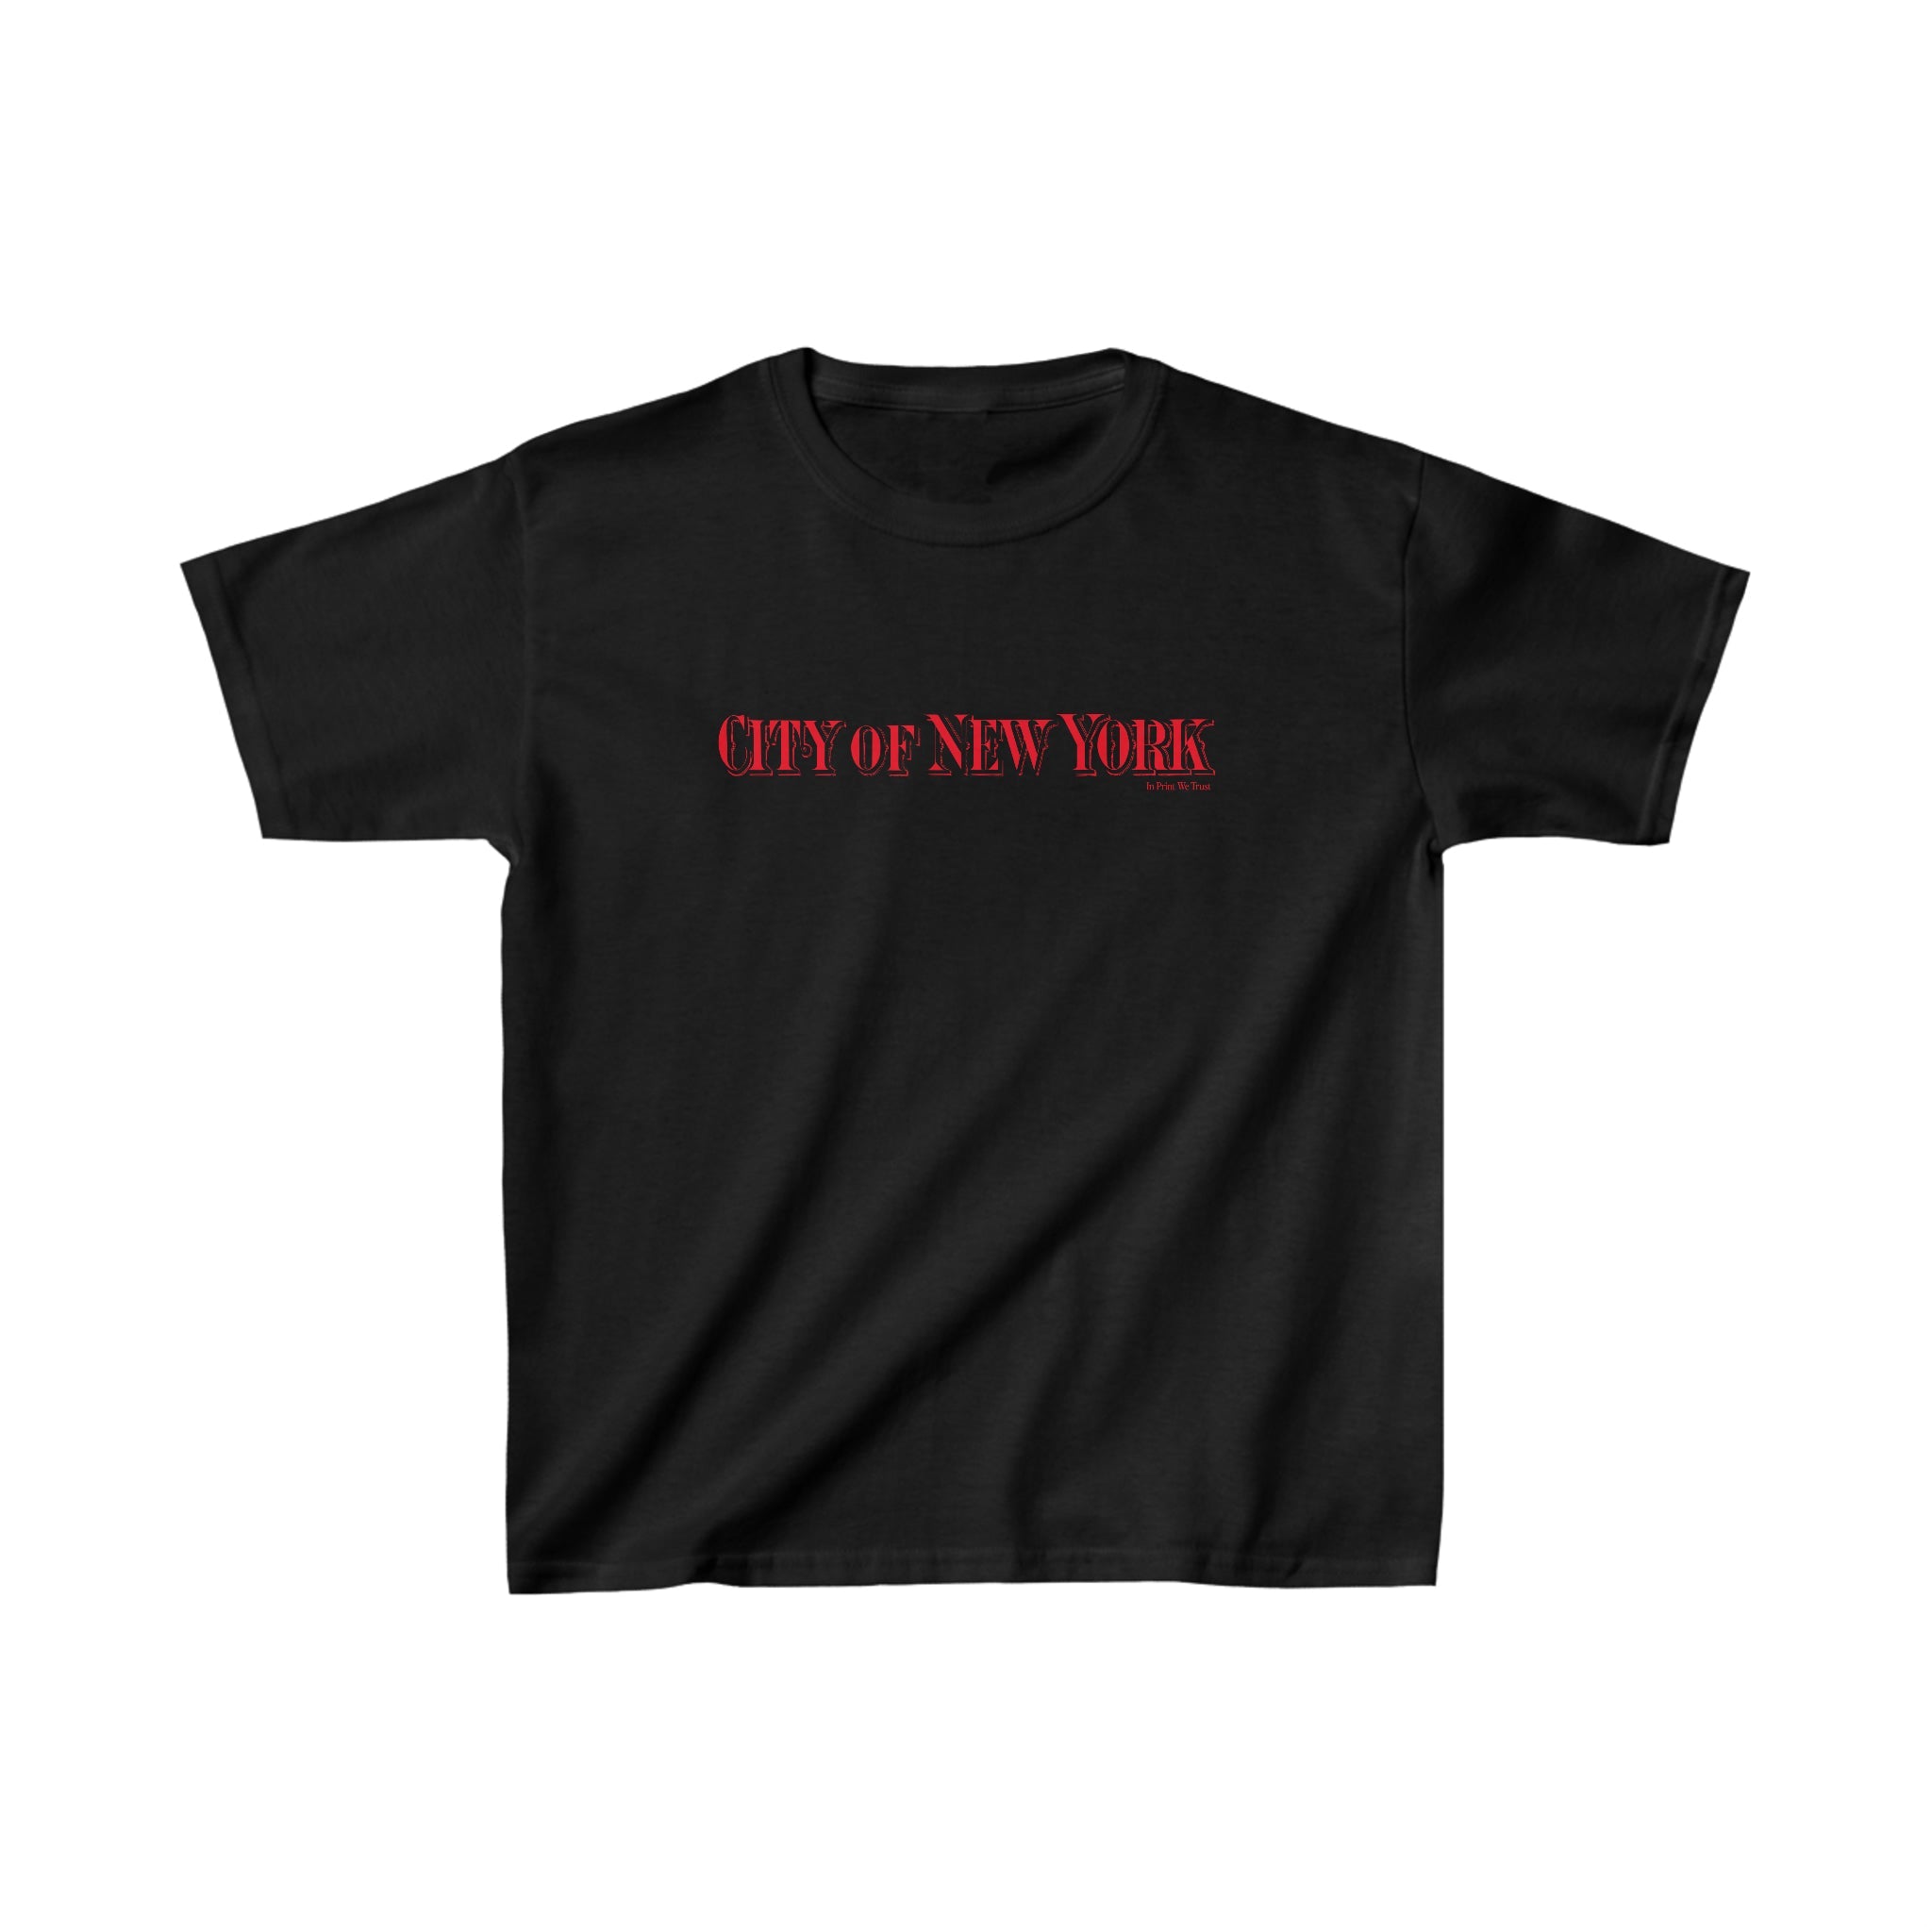 'City of New York' baby tee - In Print We Trust